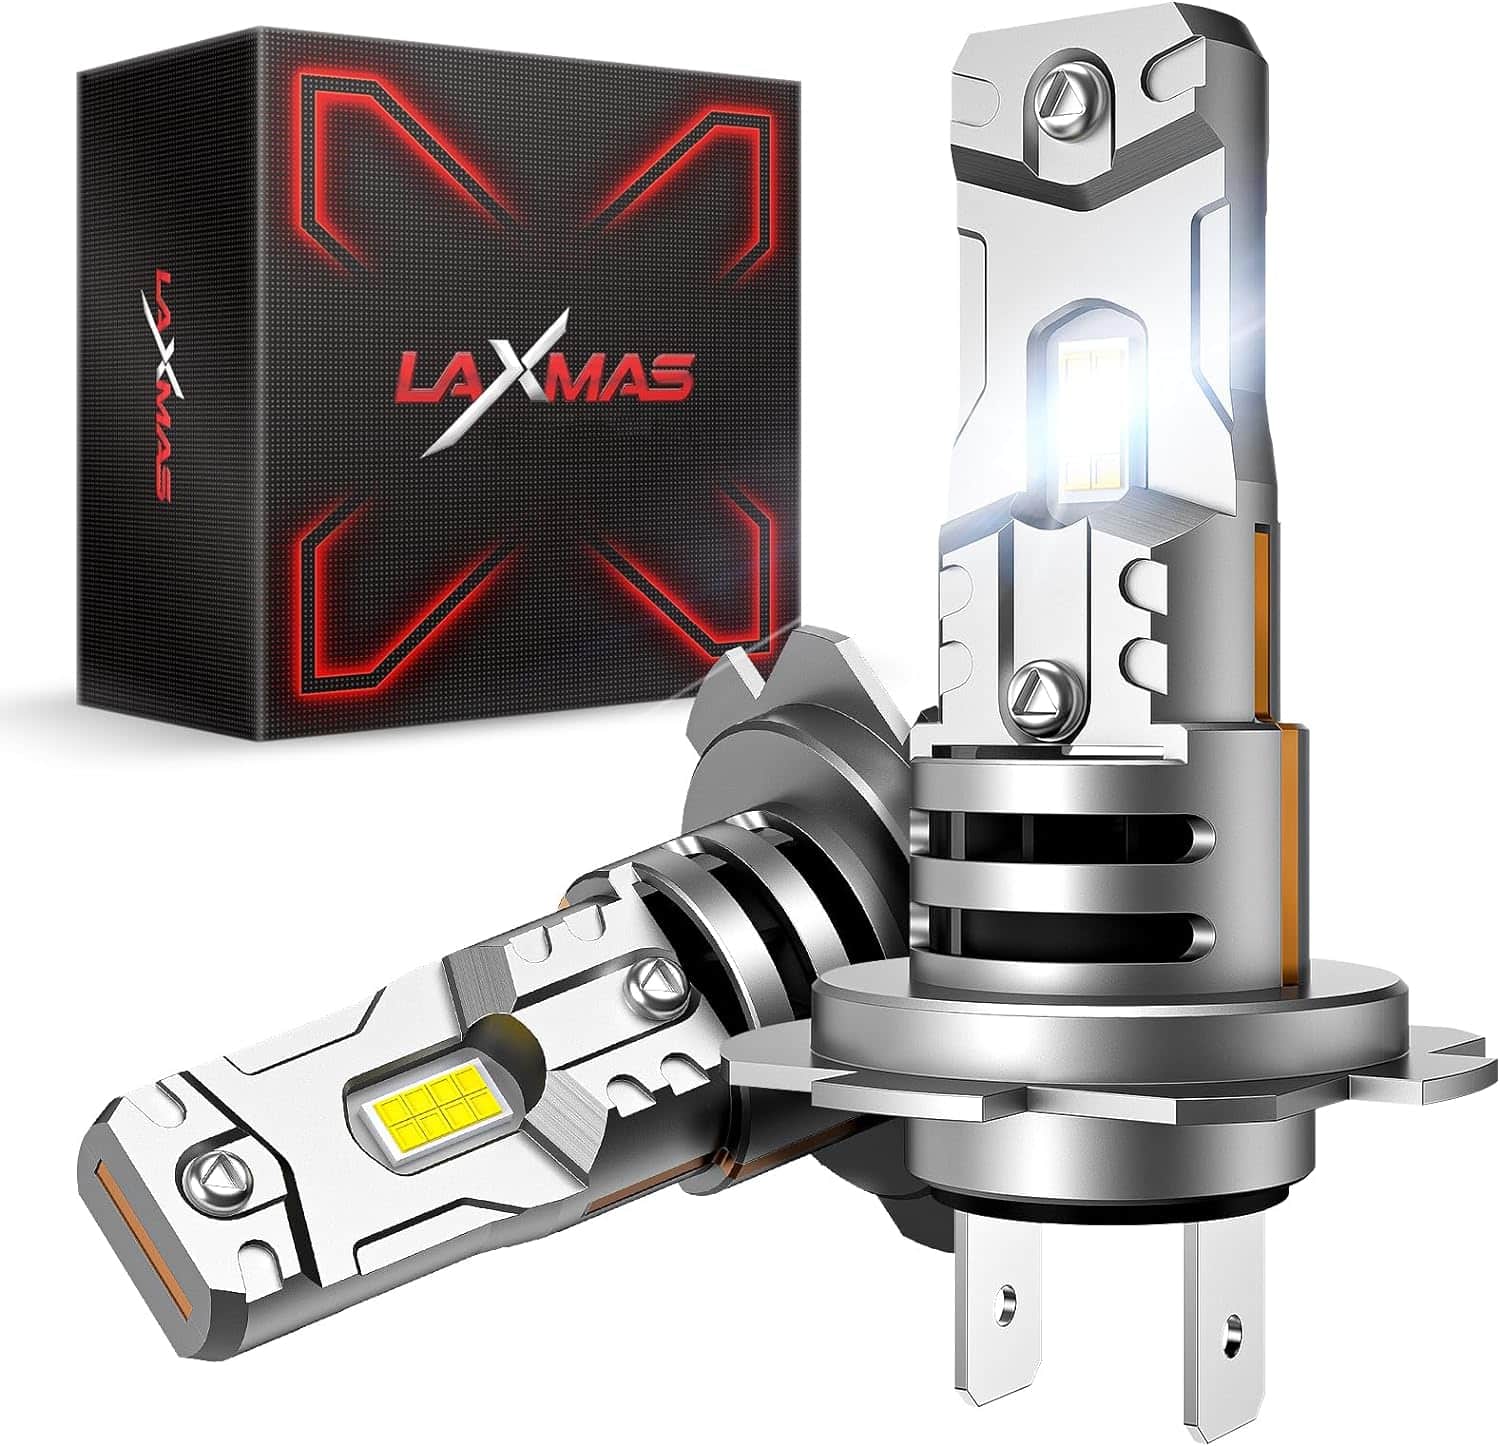 Laxmas Upgraded H7 Bulbs, Super Bright, Long Lifespan H7 Lights, Plug and Play - Pack of 2